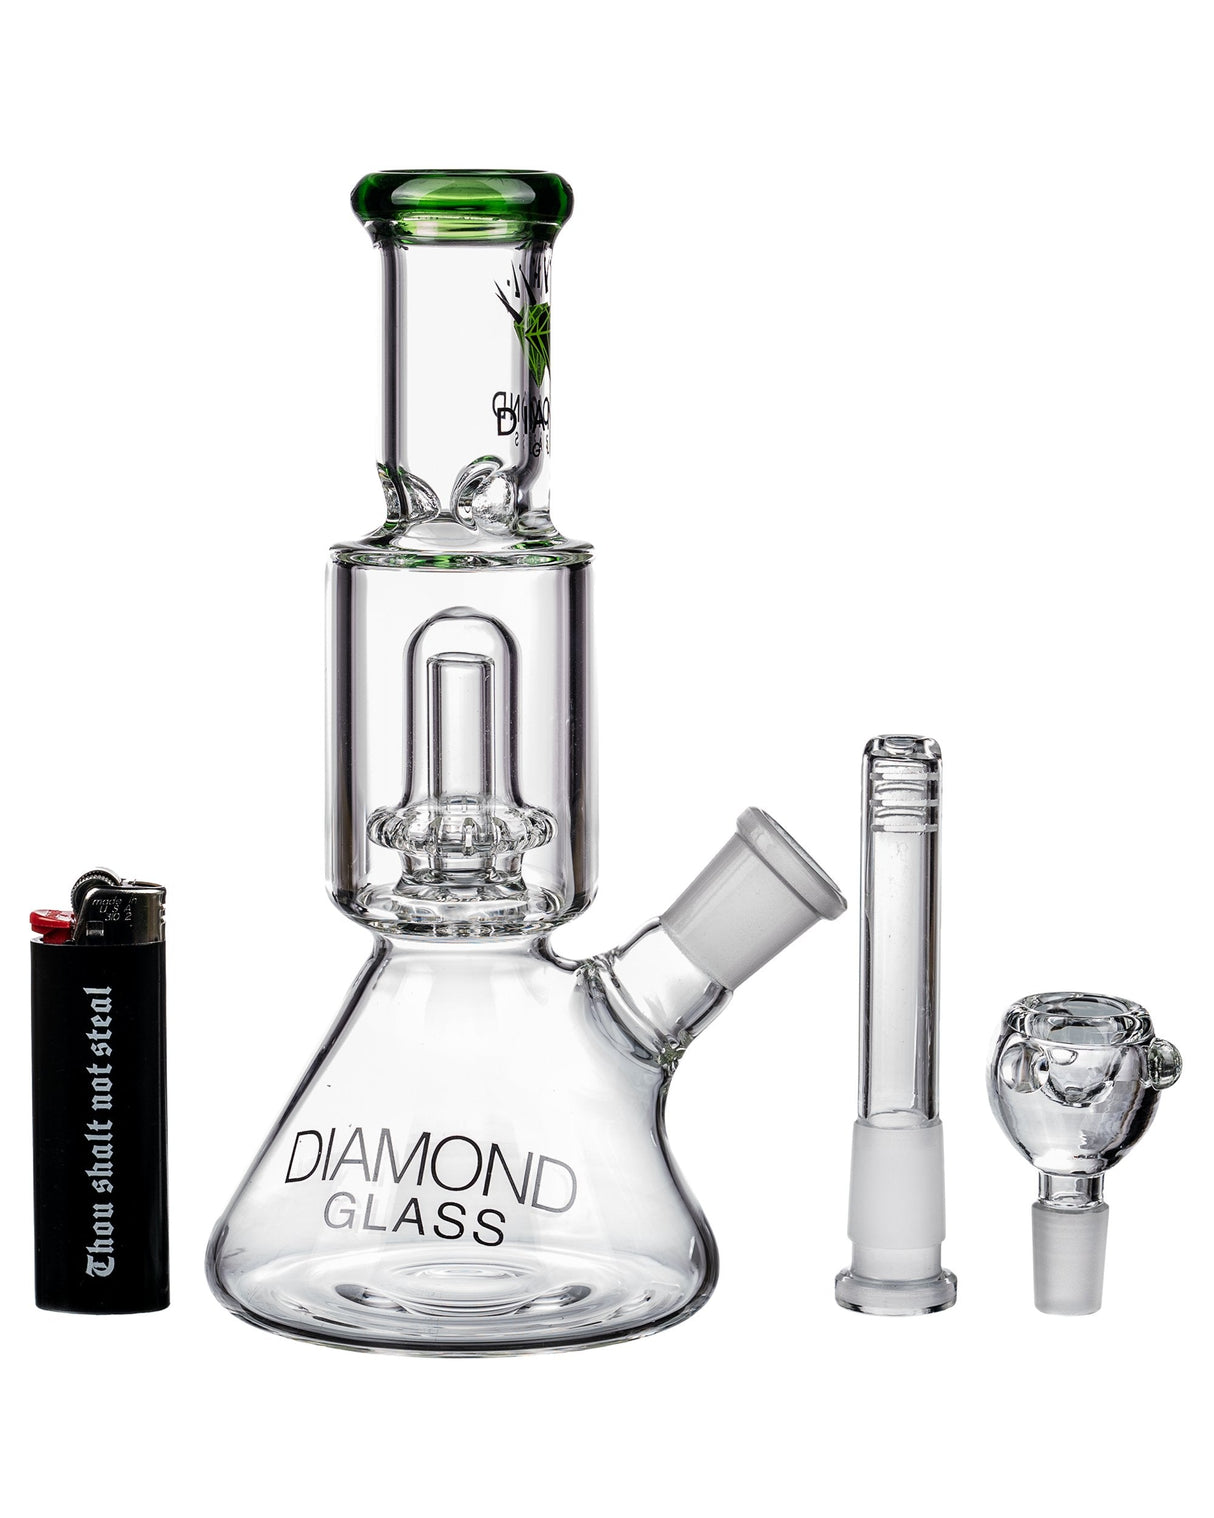 Diamond Glass - Clear & Green Short Neck UFO Beaker Bong with Showerhead Percolator, Side View